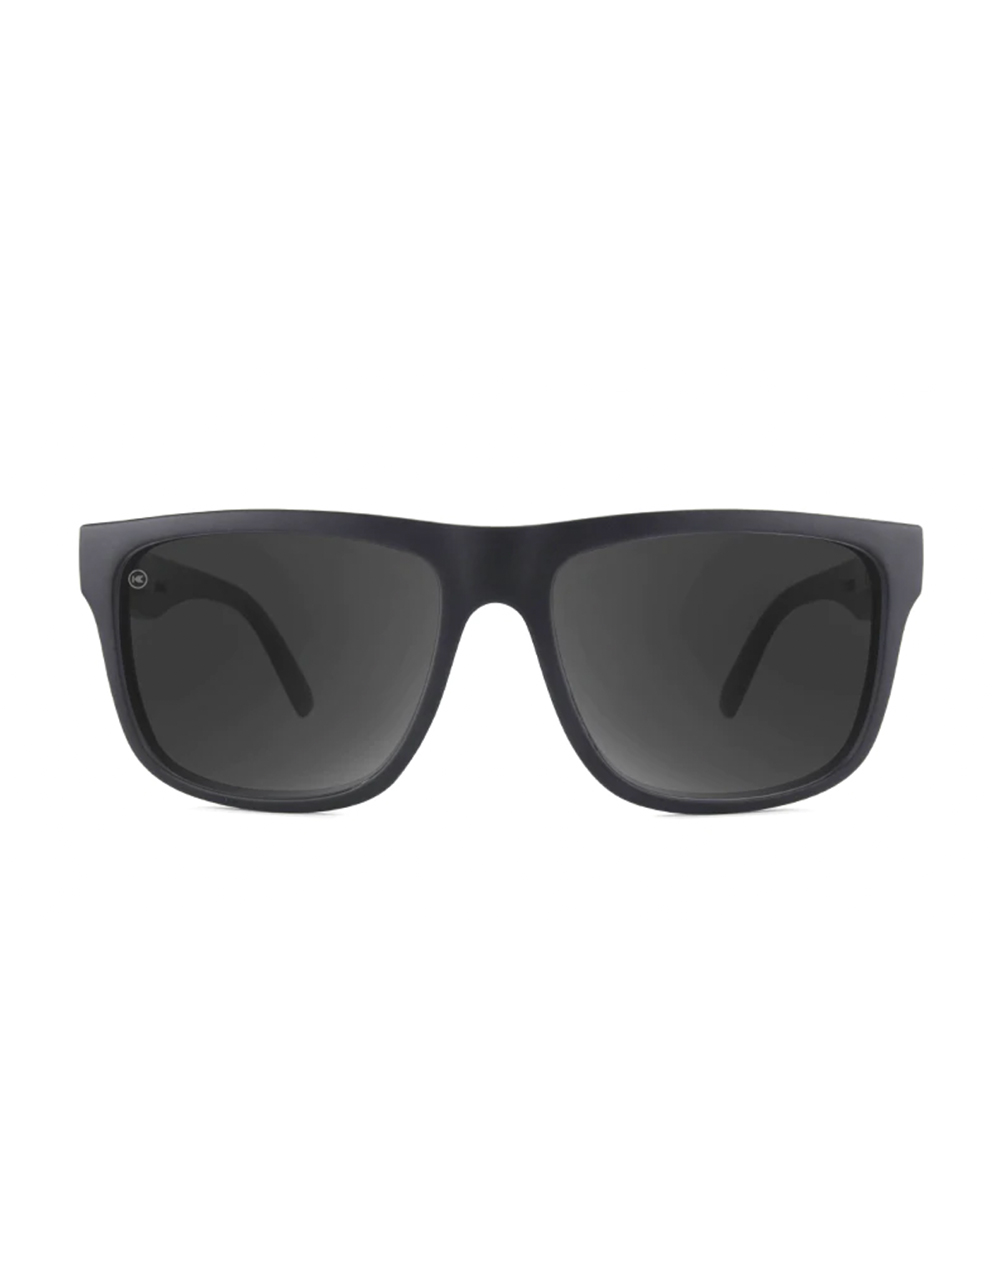 KNOCKAROUND Torrey Pines Polarized Sunglasses - BLACK | Tillys